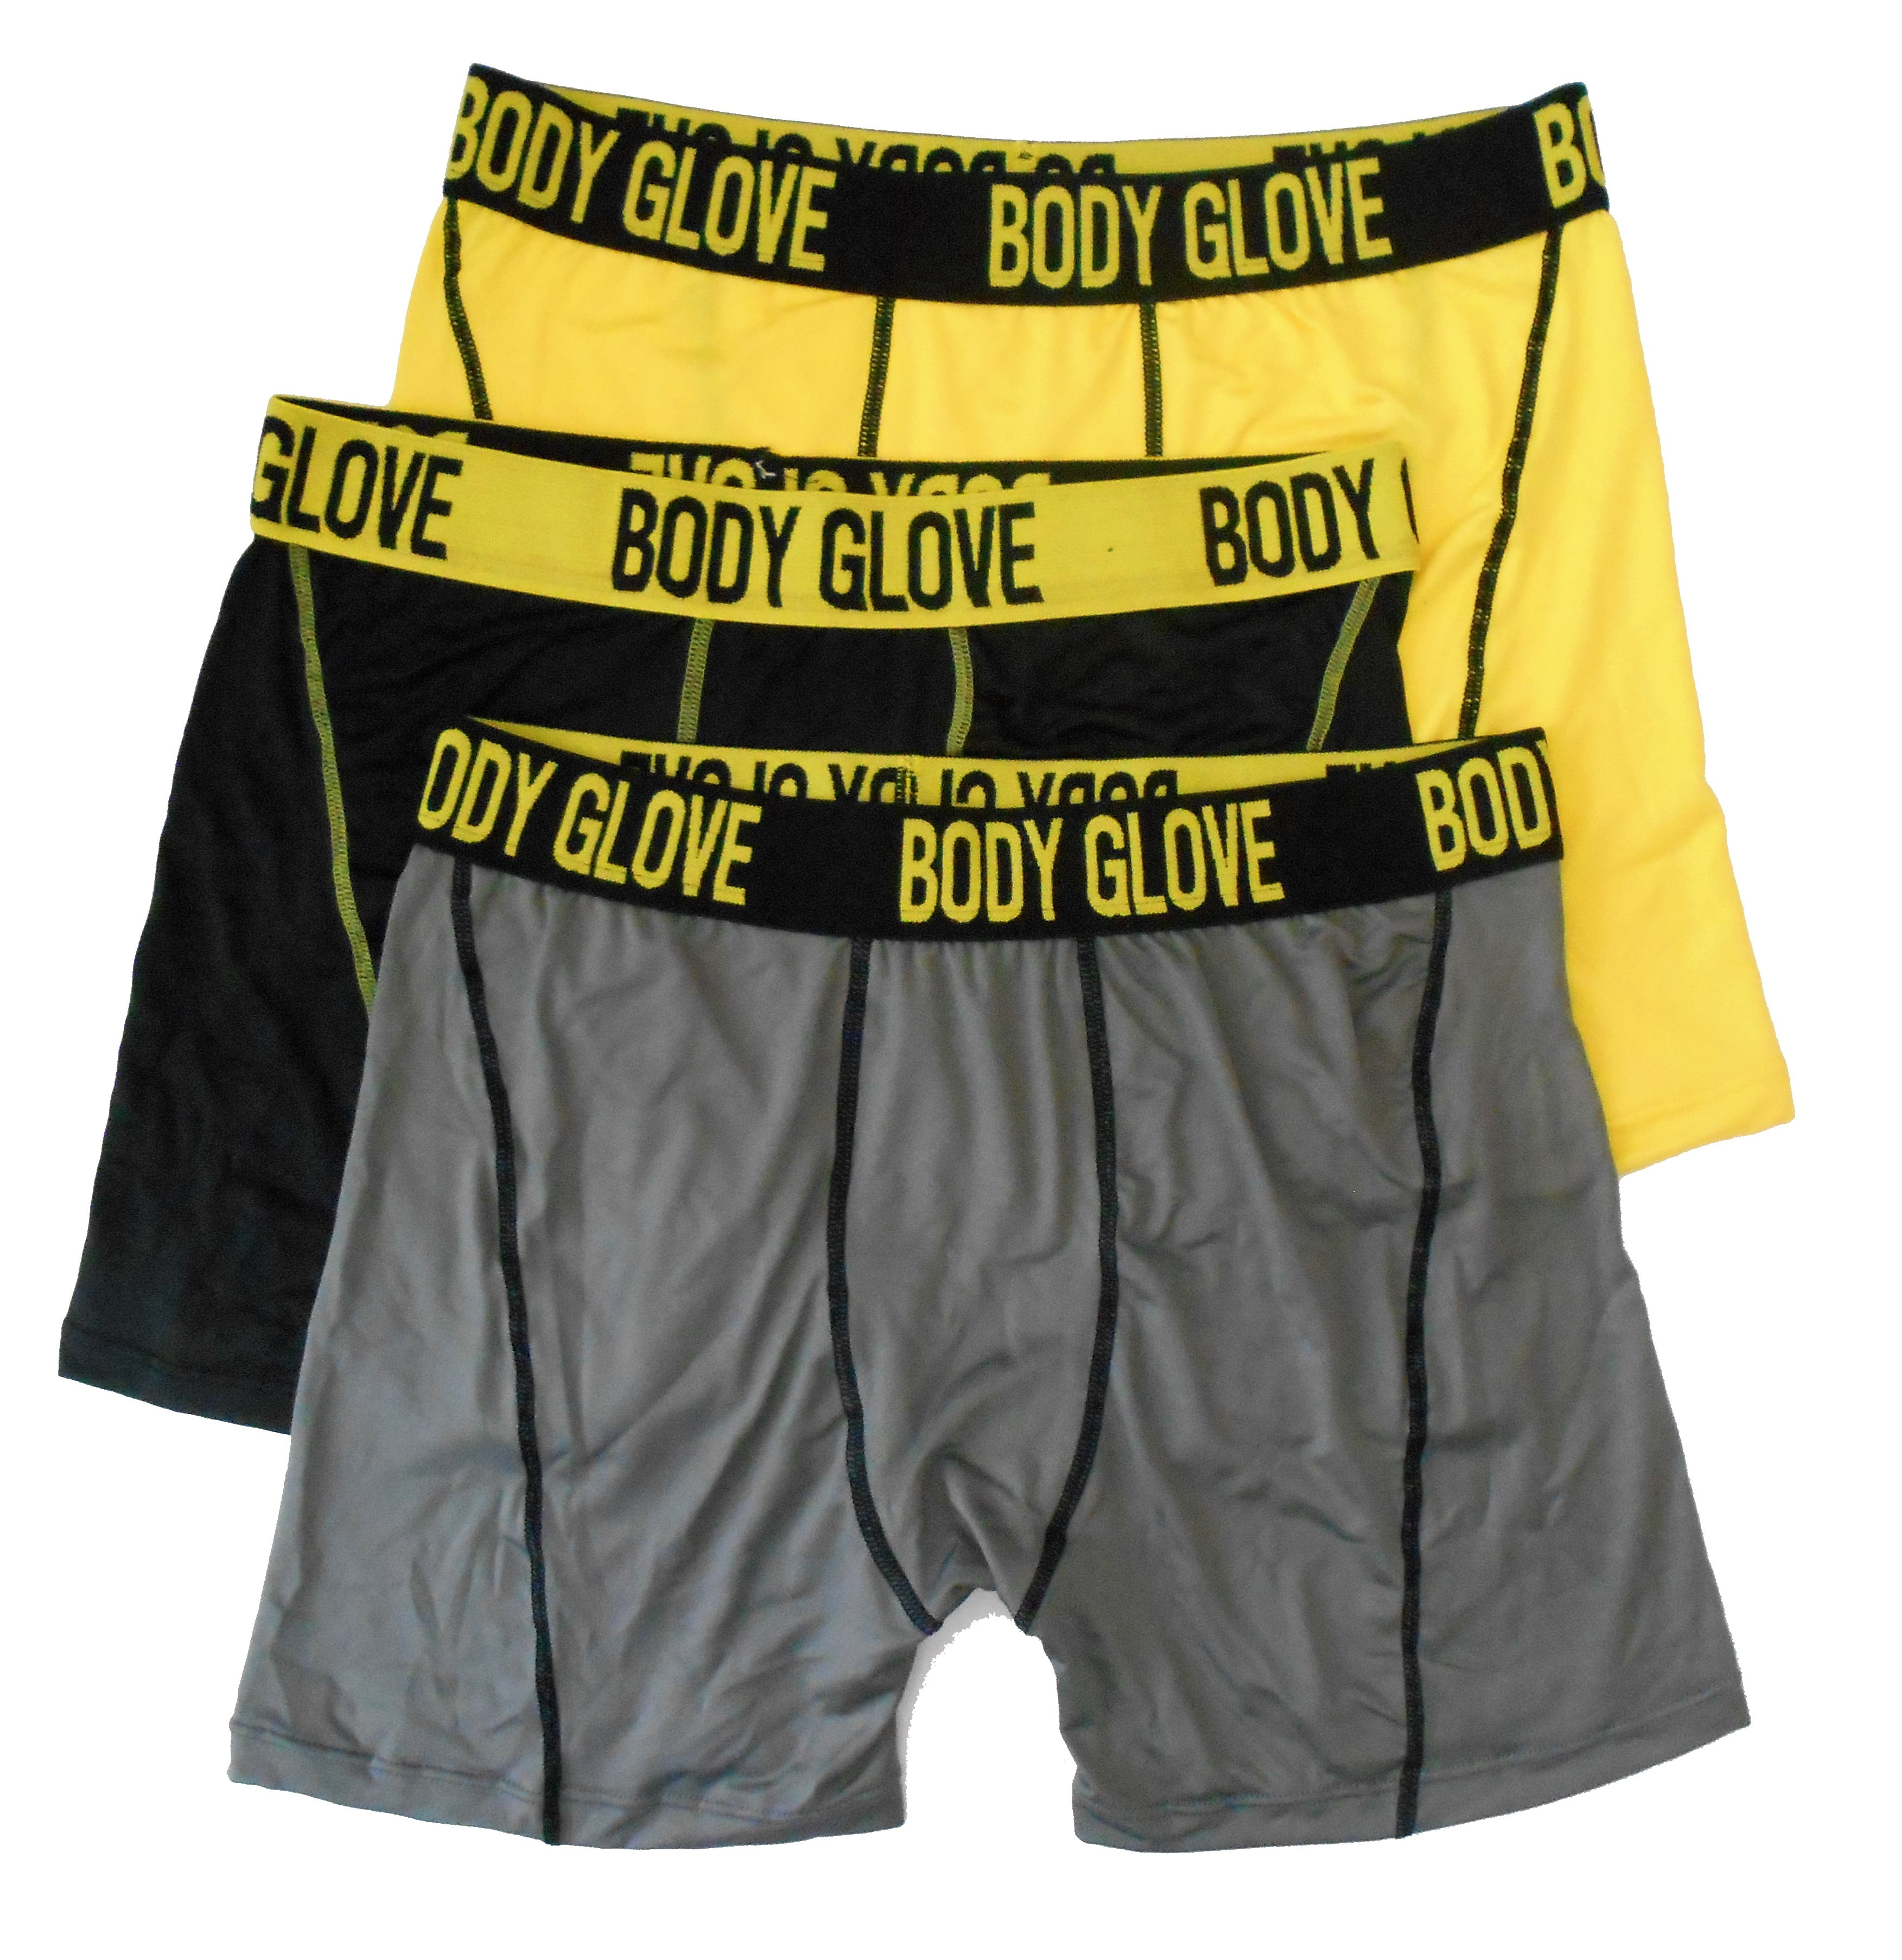 Body glove boxer brief